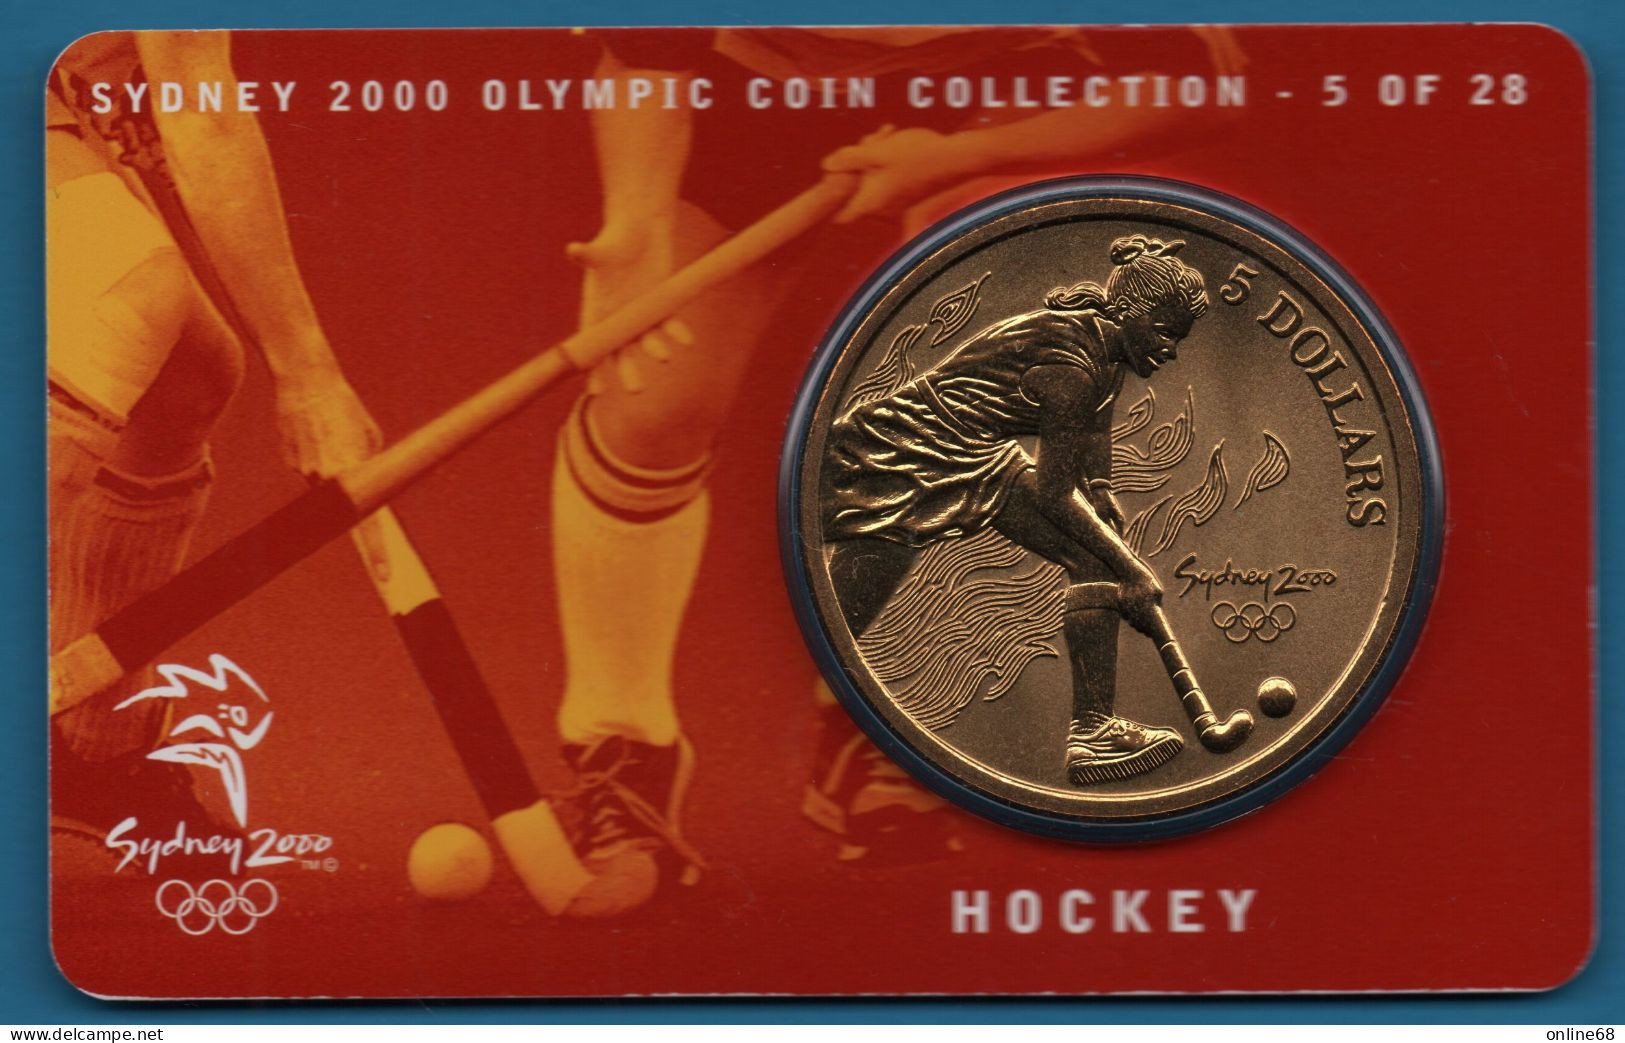 AUSTRALIA 5 DOLLARS 2000 OLYMPIC COIN COLLECTION  SYDNEY 2000  Hockey KM# 360 - 5 Dollars